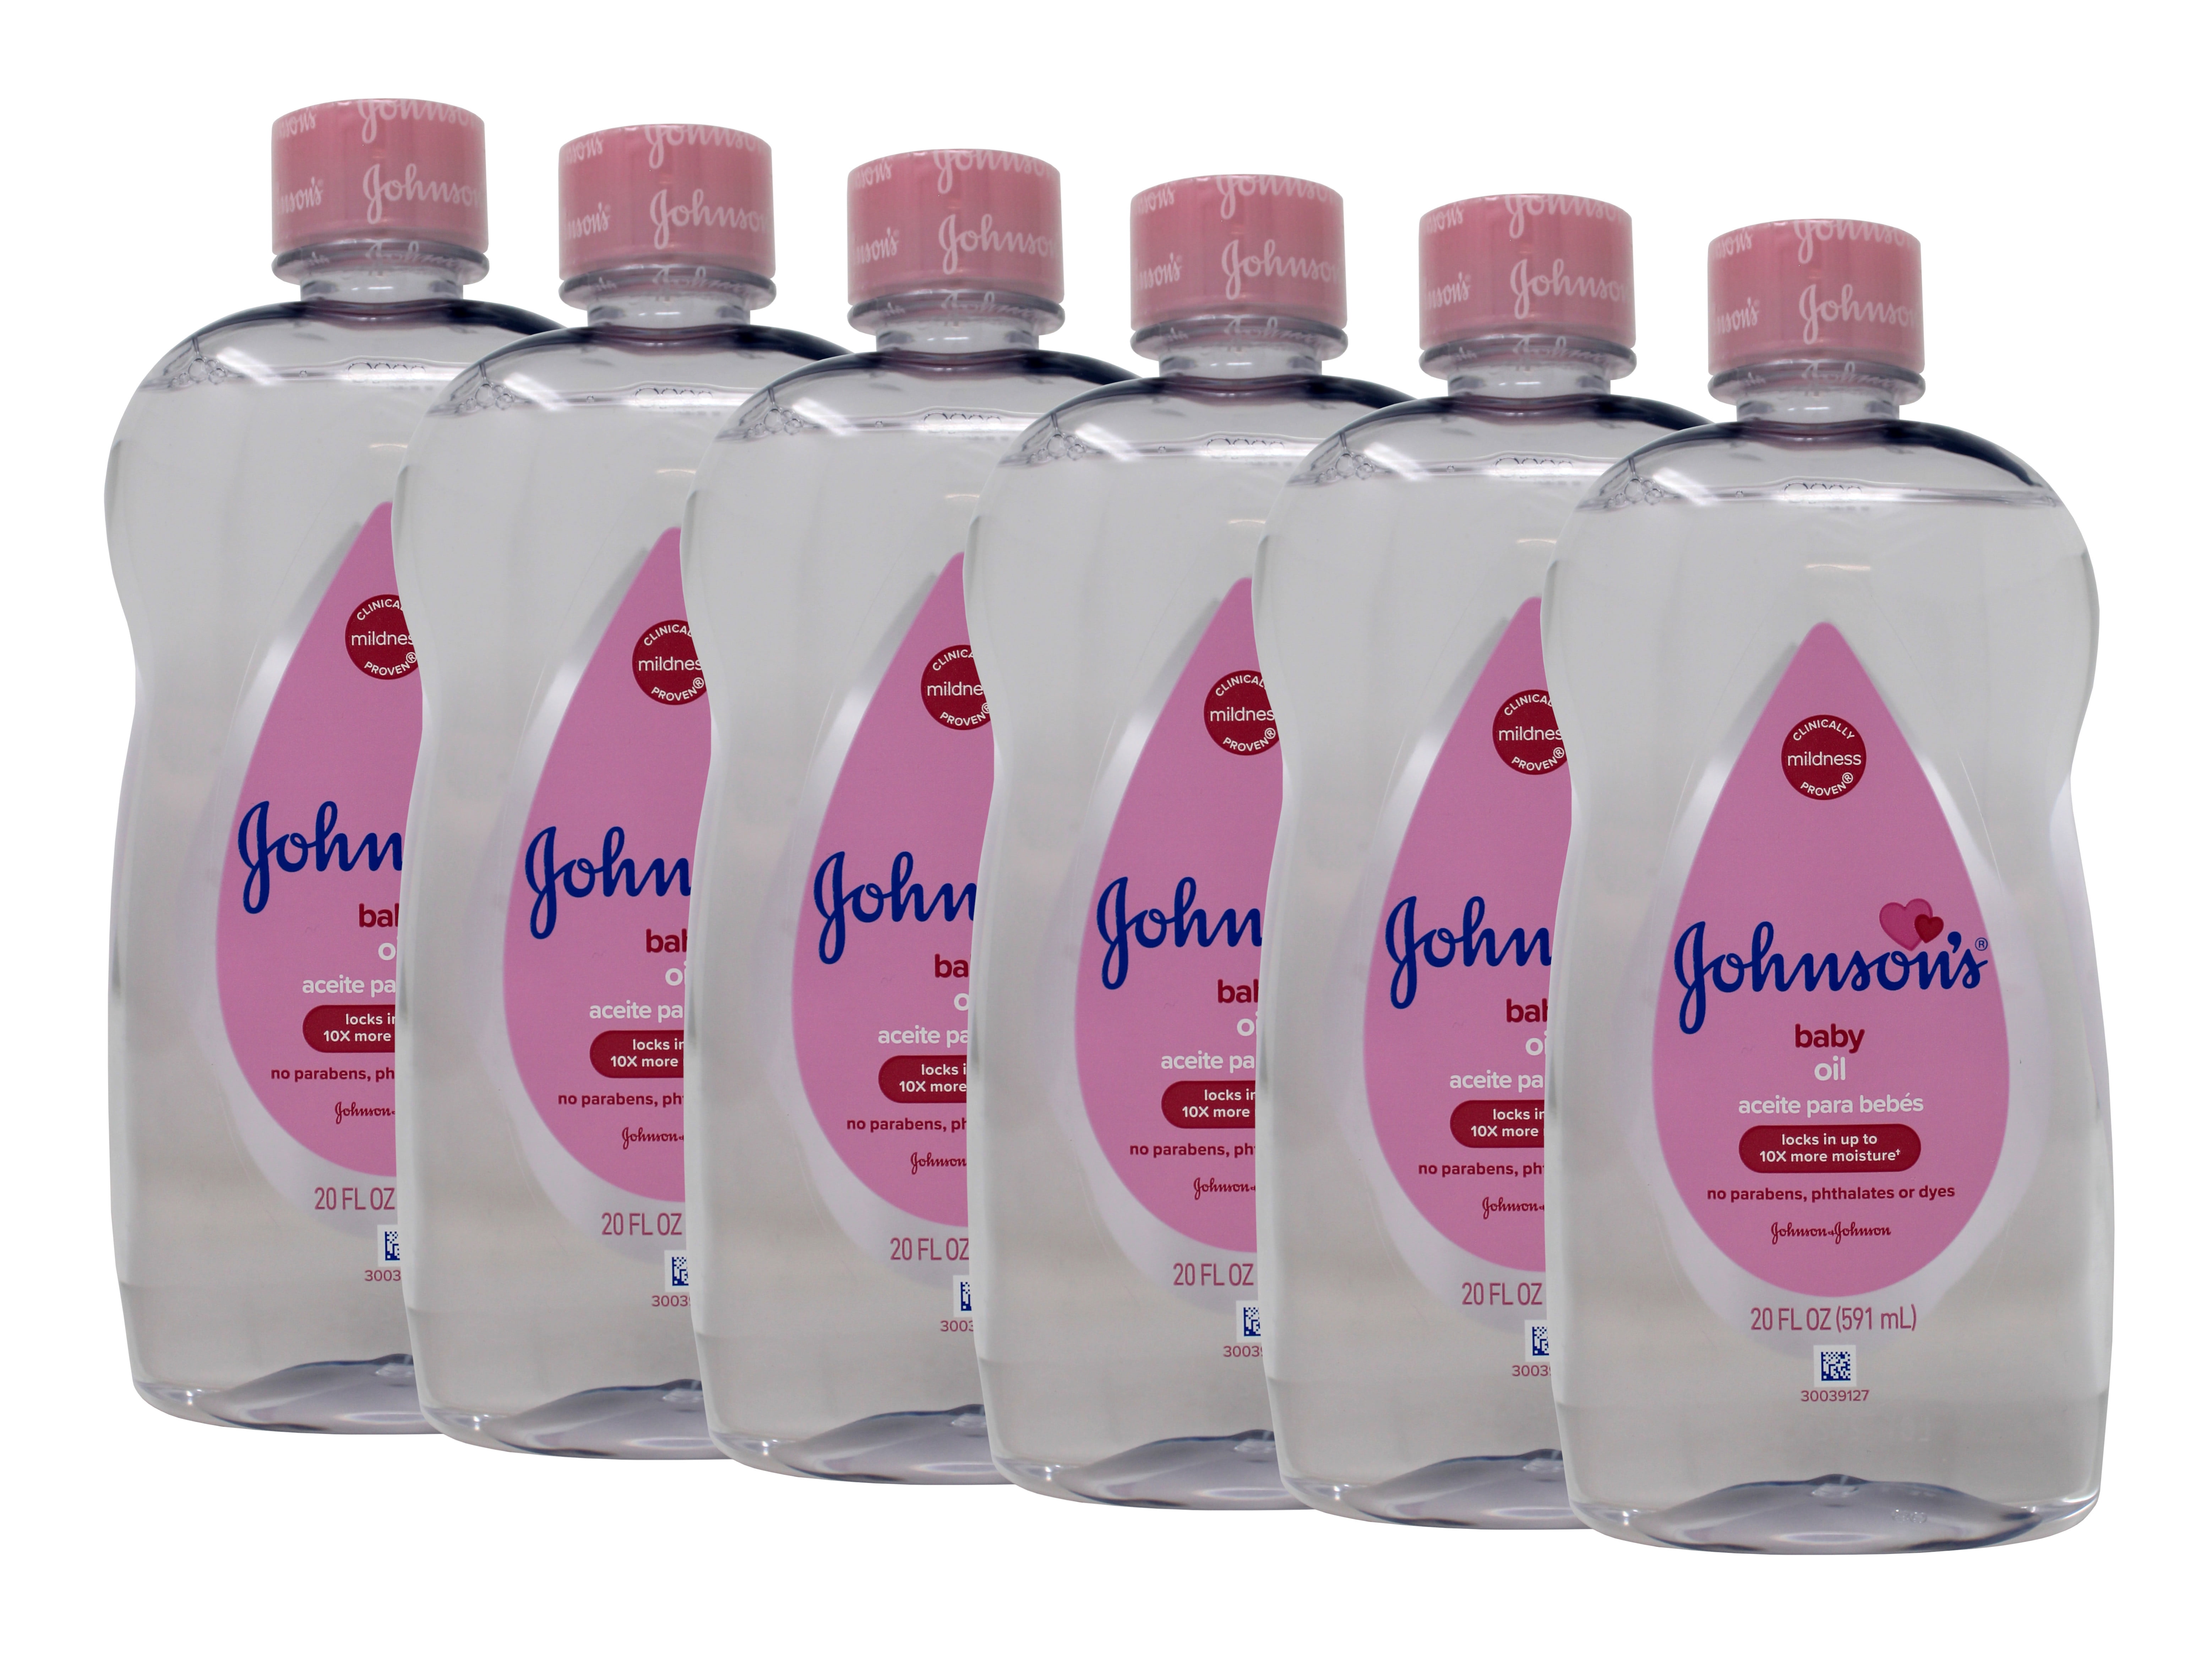 Liquid Johnson's Baby Oil, Packaging Type: Bottle, Packaging Size